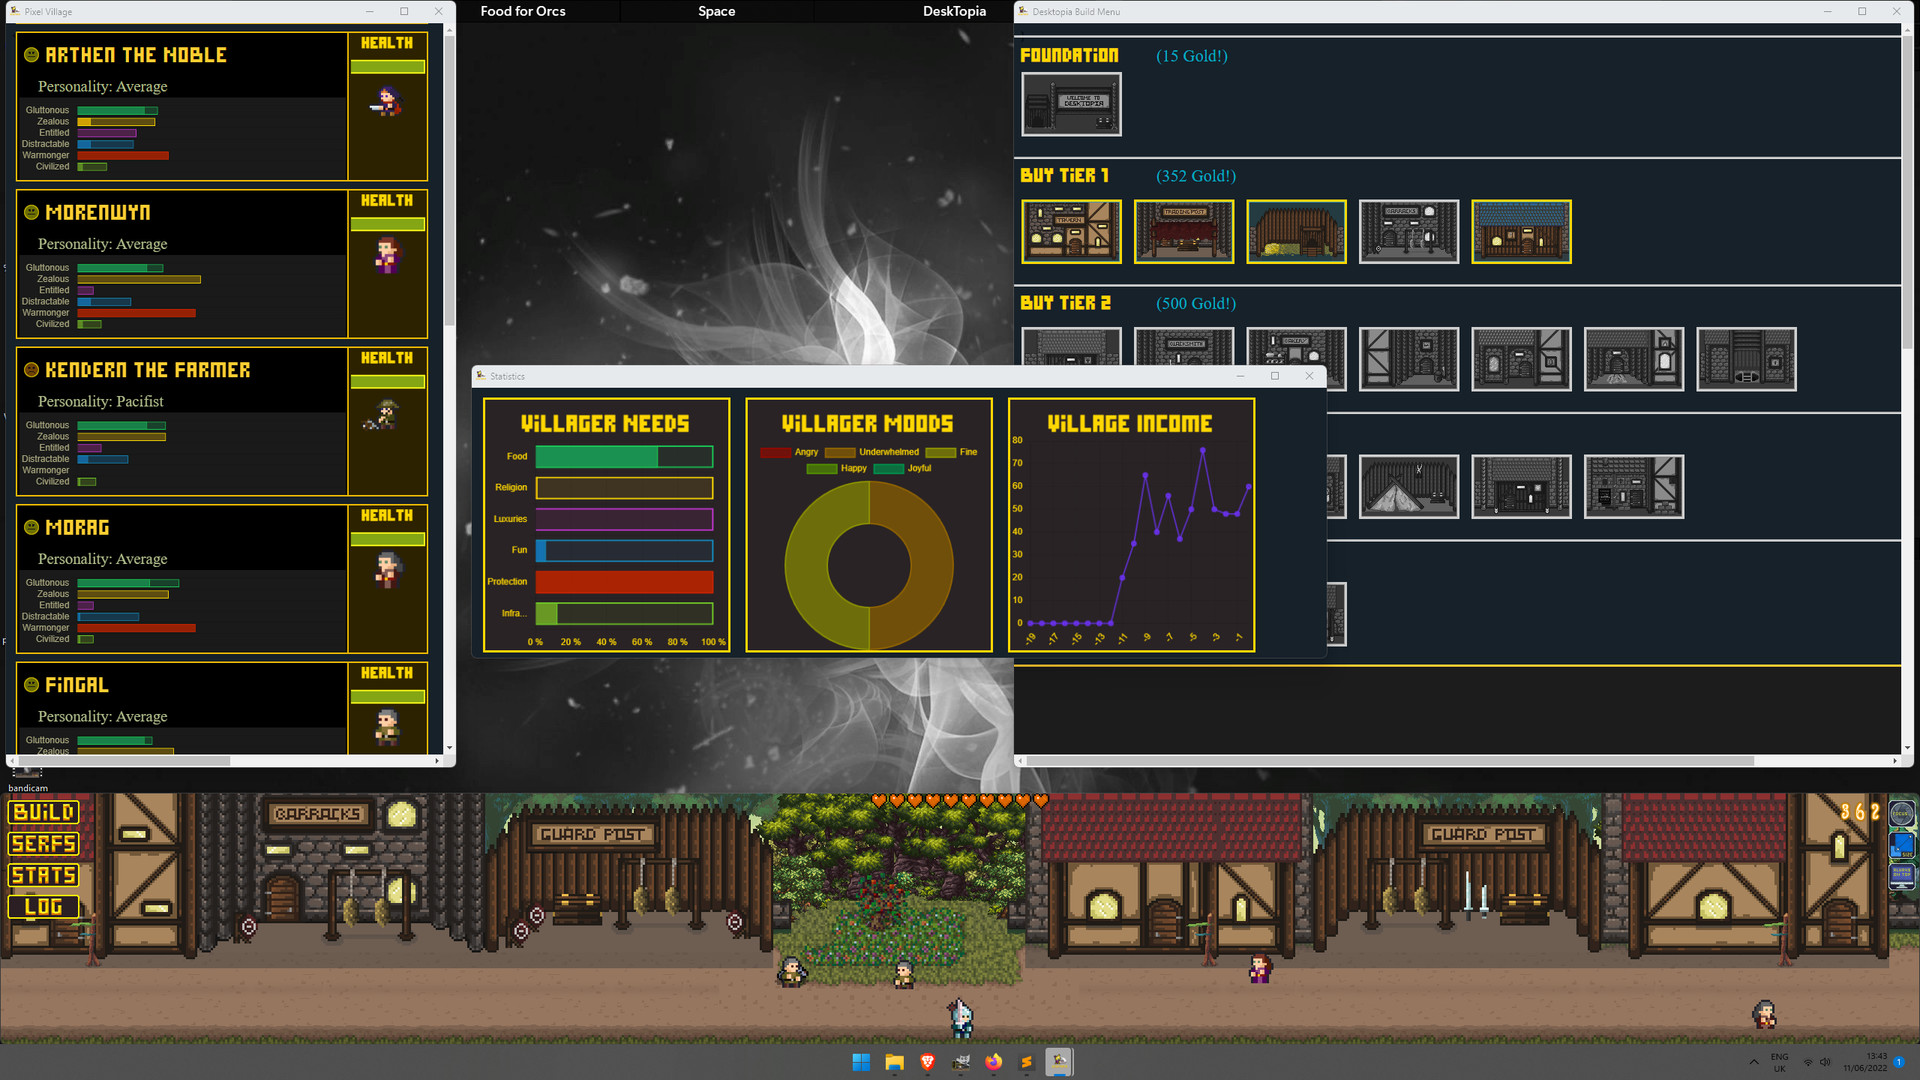 Desktopia: A Desktop Village Simulator Free Download